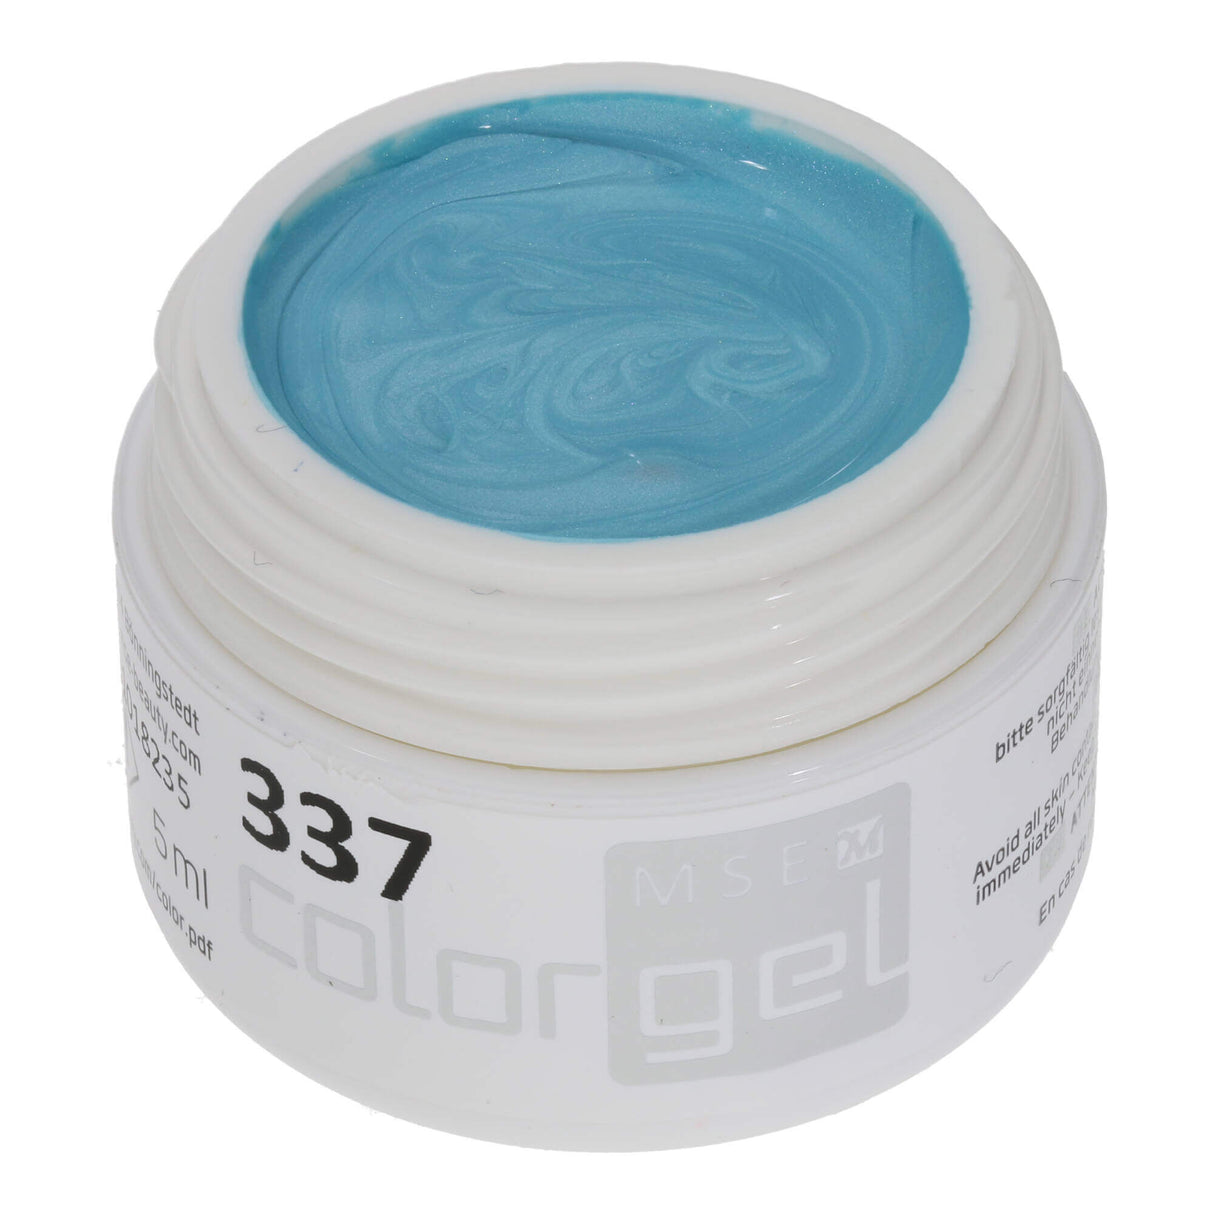 #337 Premium-EFFEKT Color Gel 5ml Helles Türkis mit zartem Perlglanz